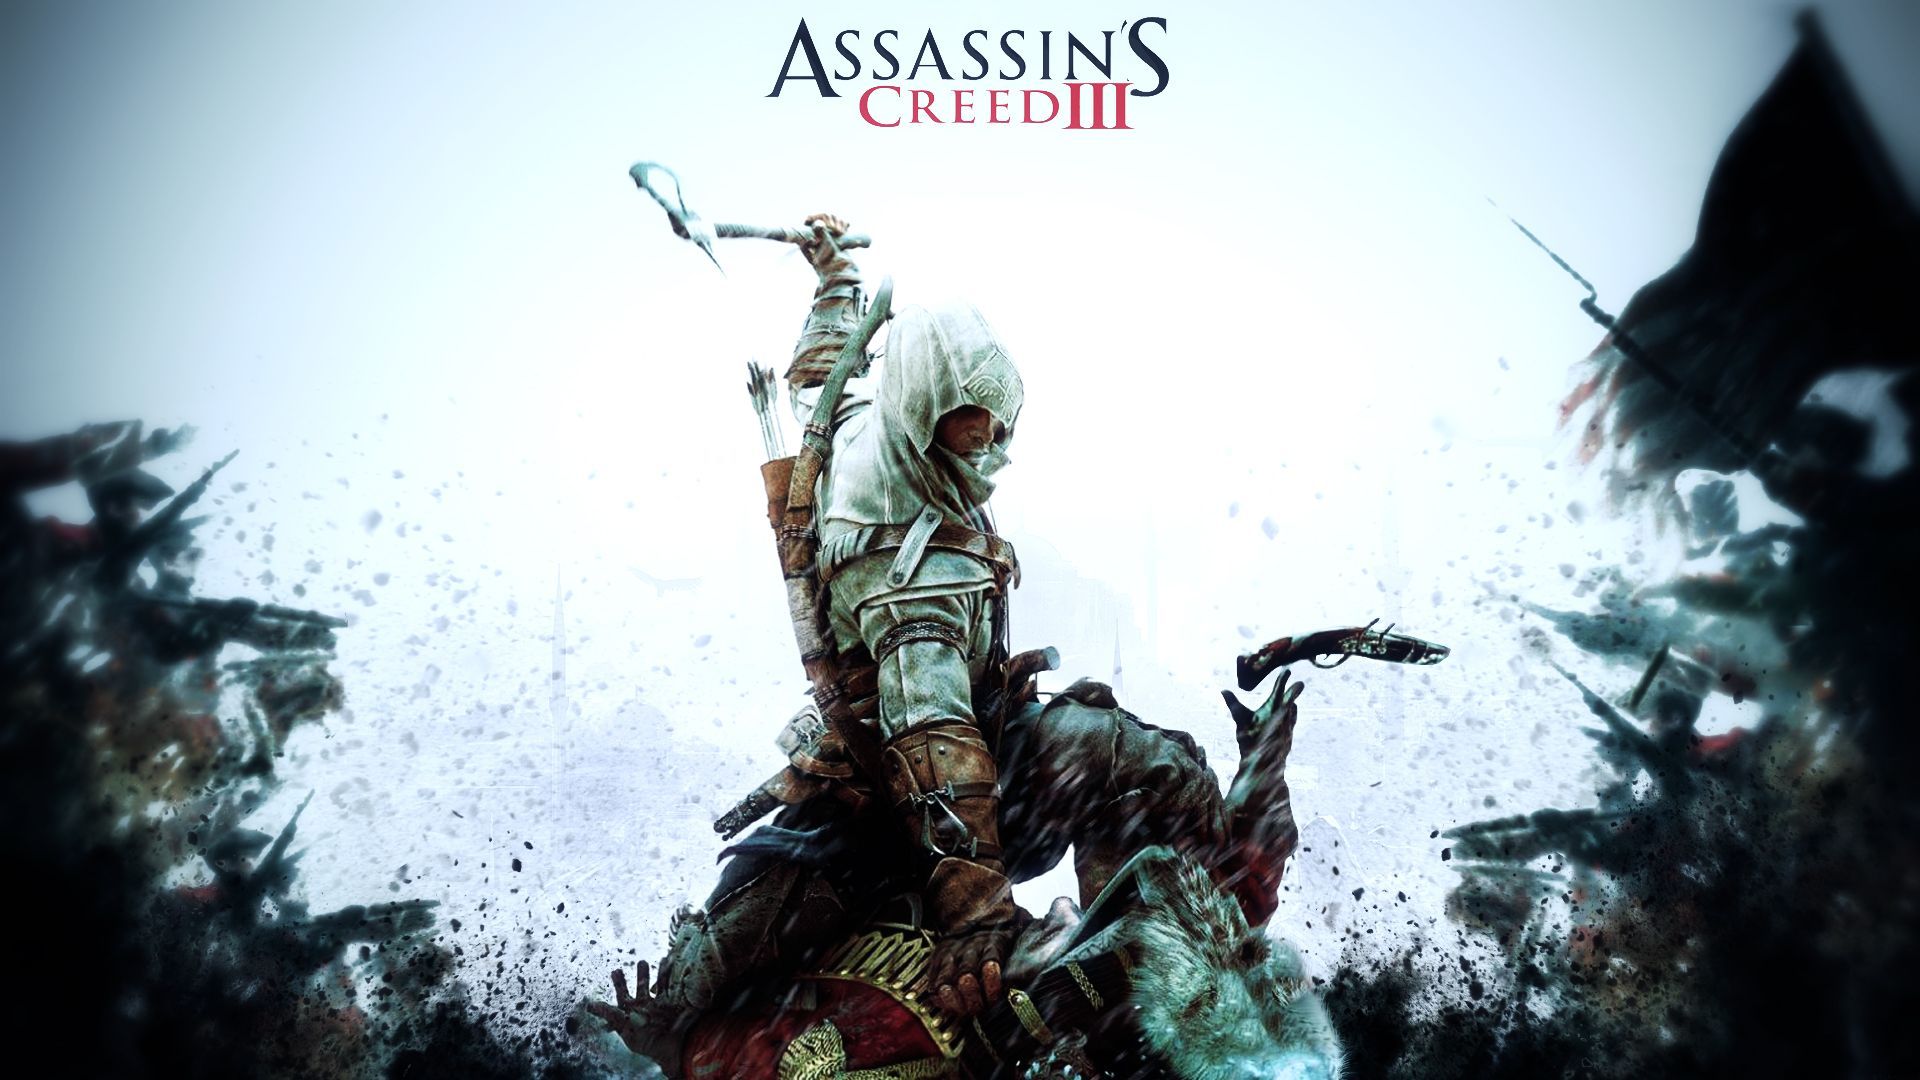 32+] Assassin's Creed HD Wallpapers - WallpaperSafari